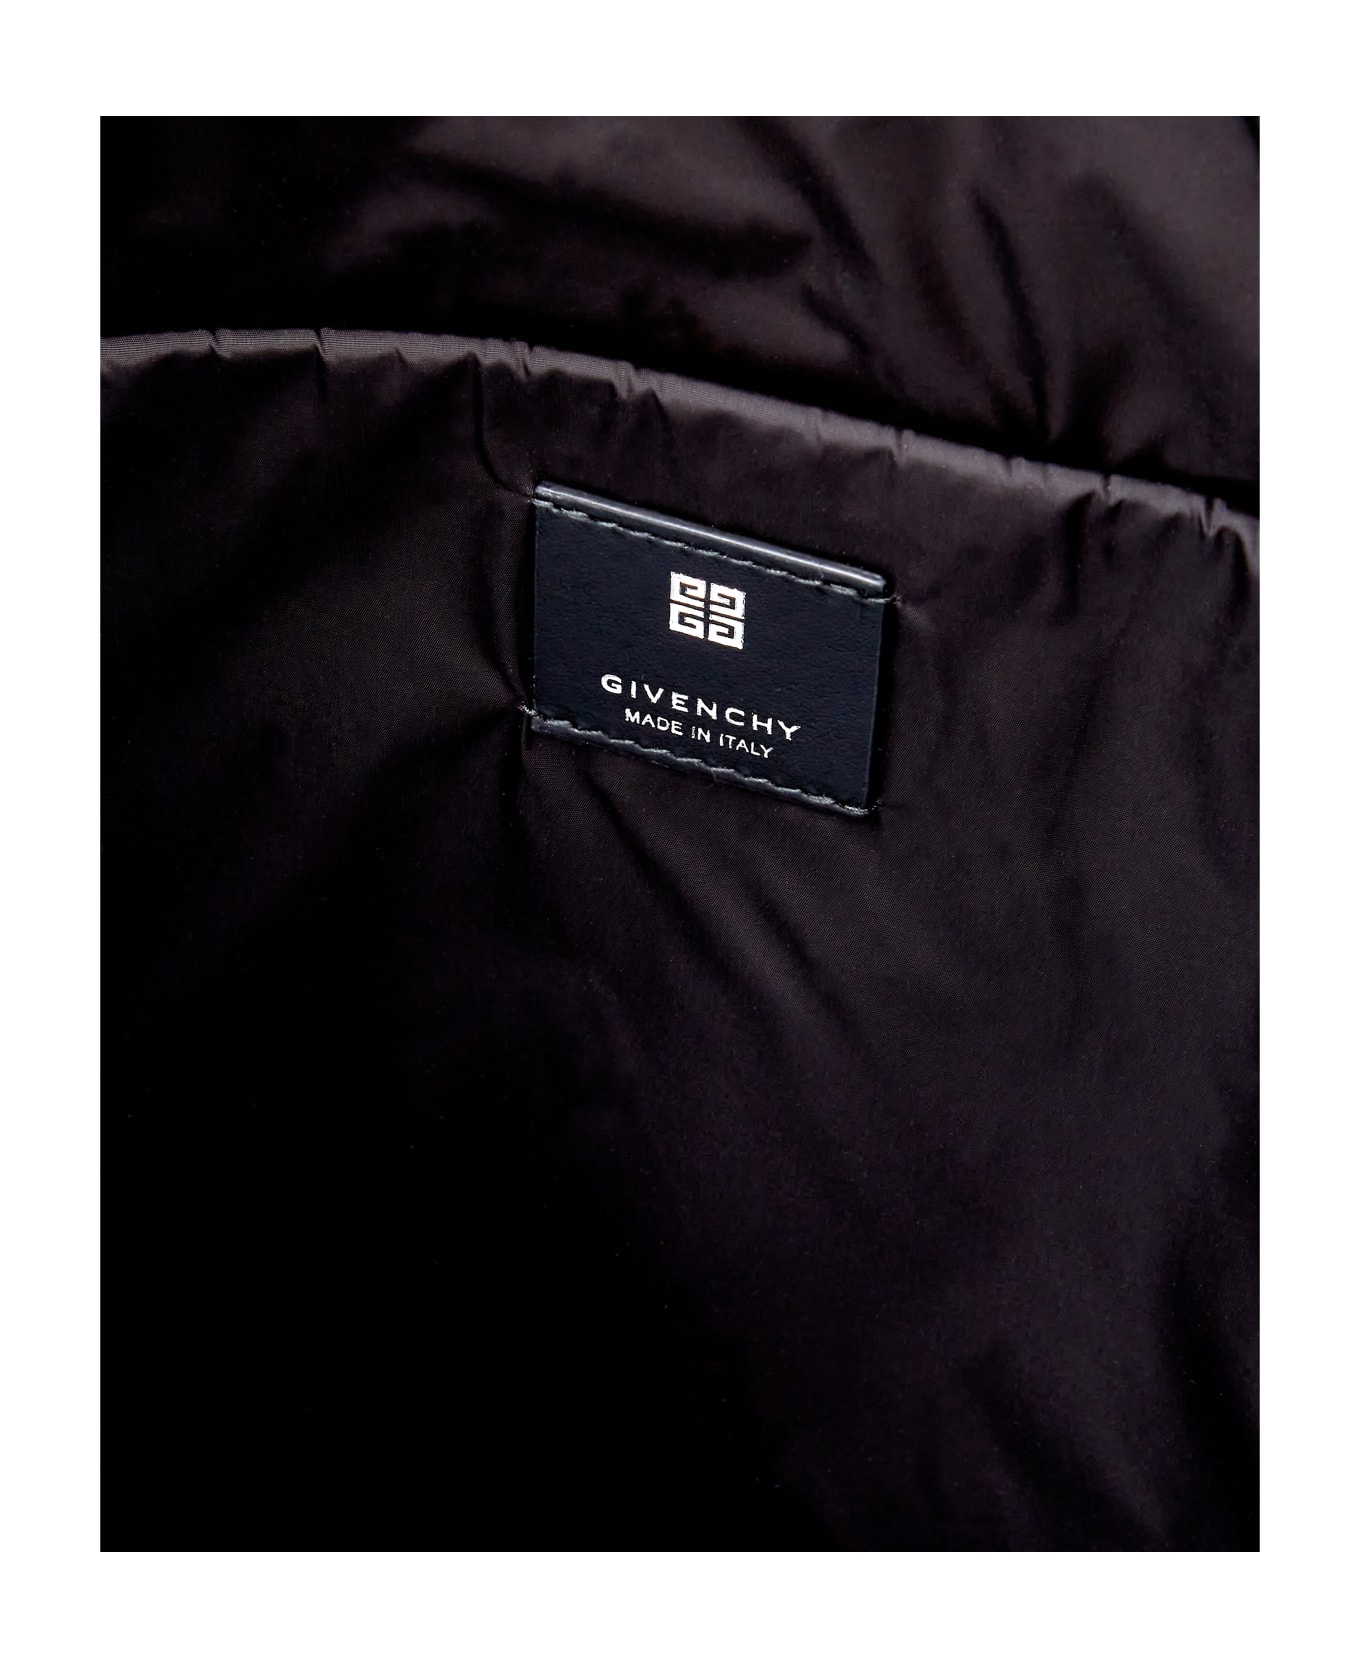 Givenchy G-trek Backpack - khaki